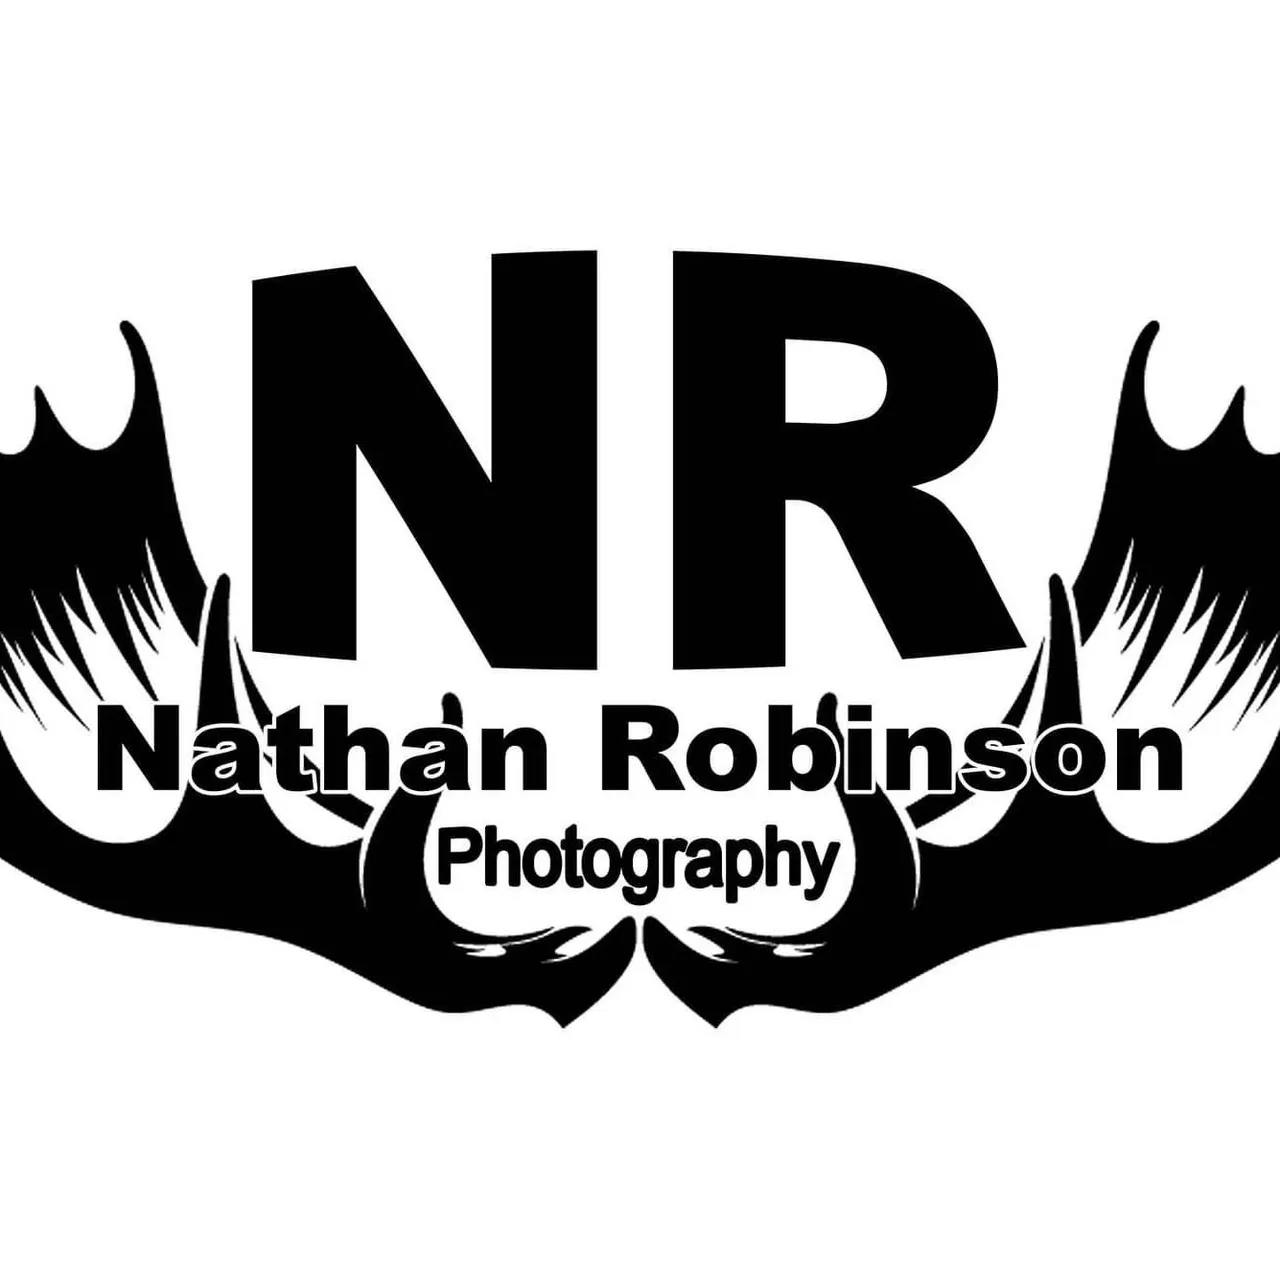 Nathan Robinson Photography logo